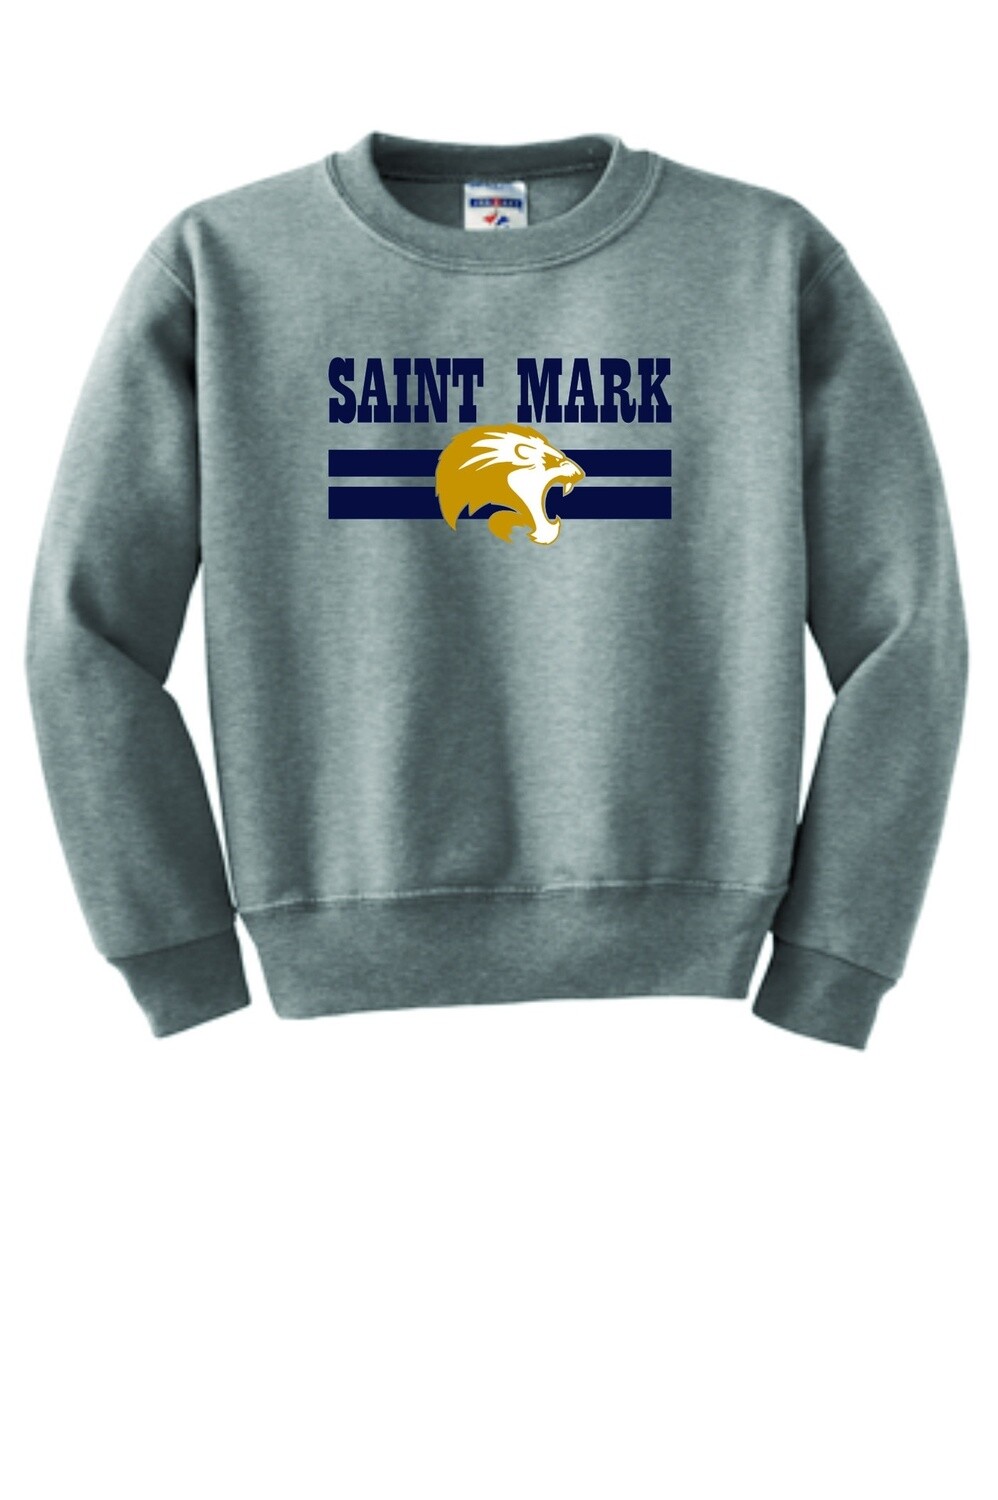 St. Mark Youth Crewneck Sweatshirt, Size: Small-562B, Colour: Oxford Grey